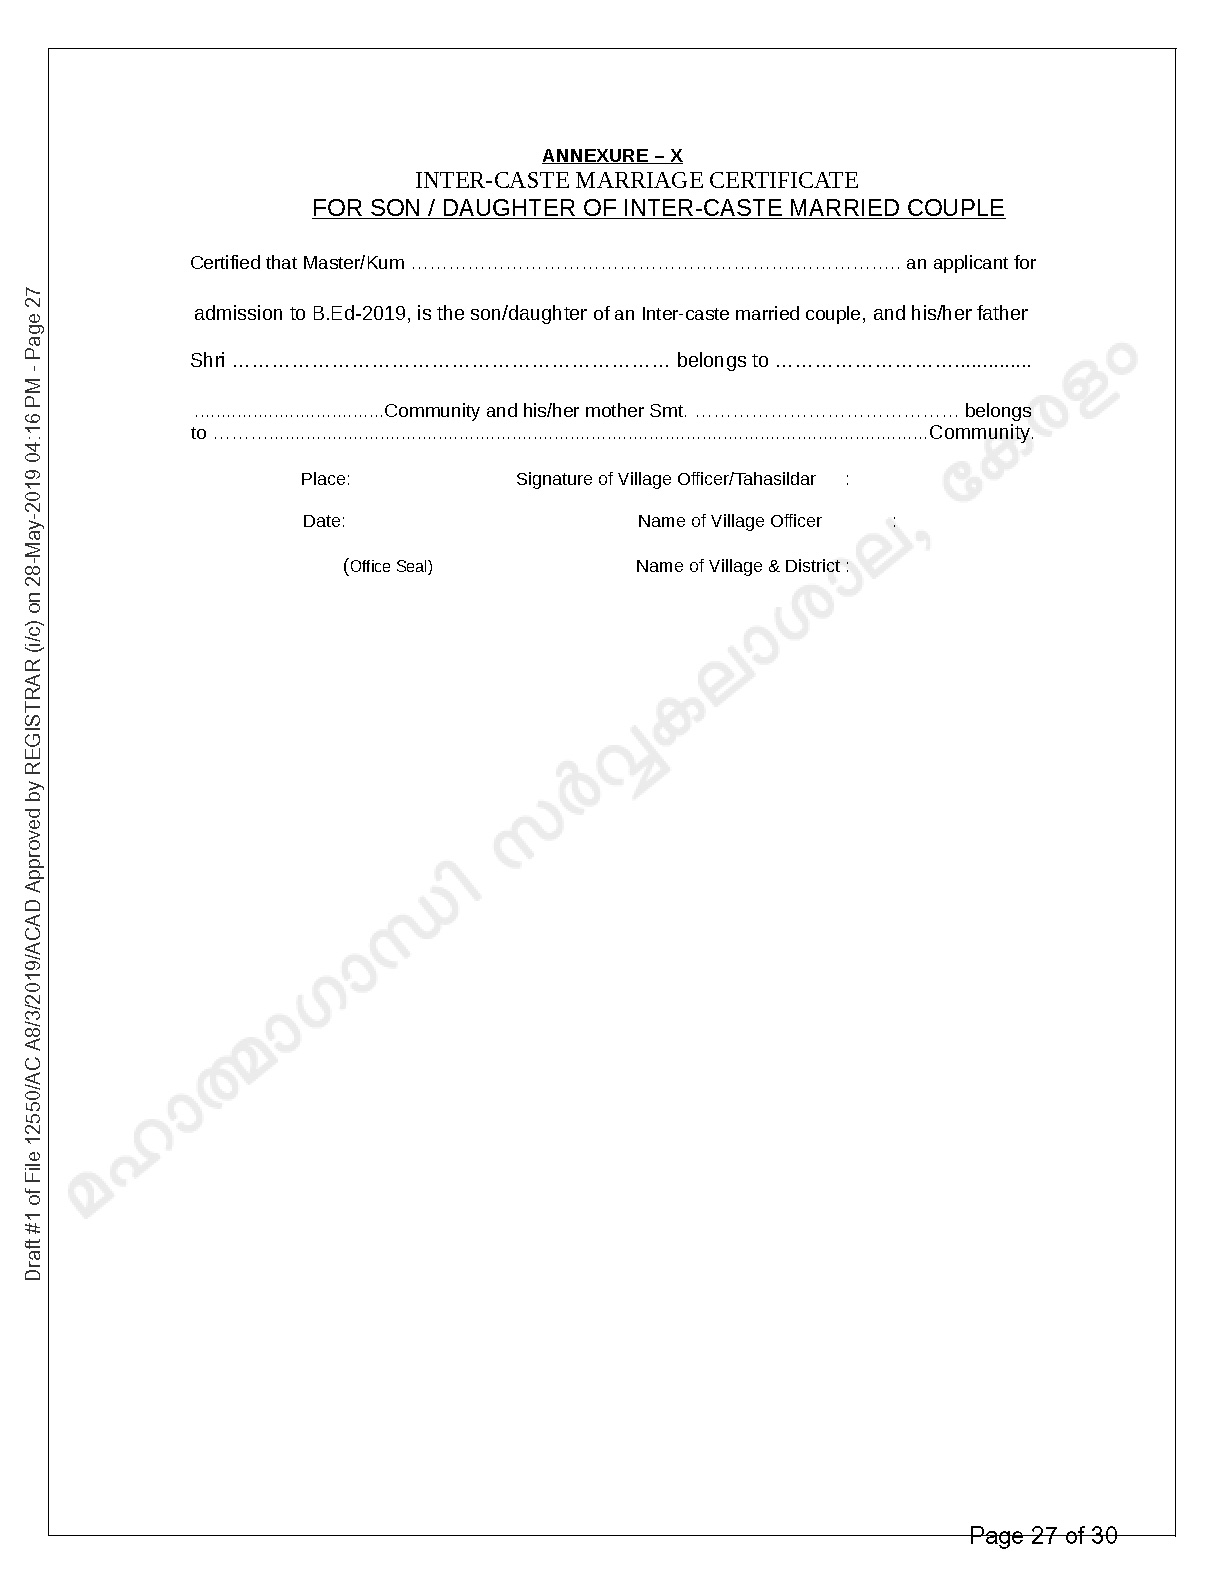 MG University B Ed Prospectus and Application form 2019 2020 - Notification Image 19